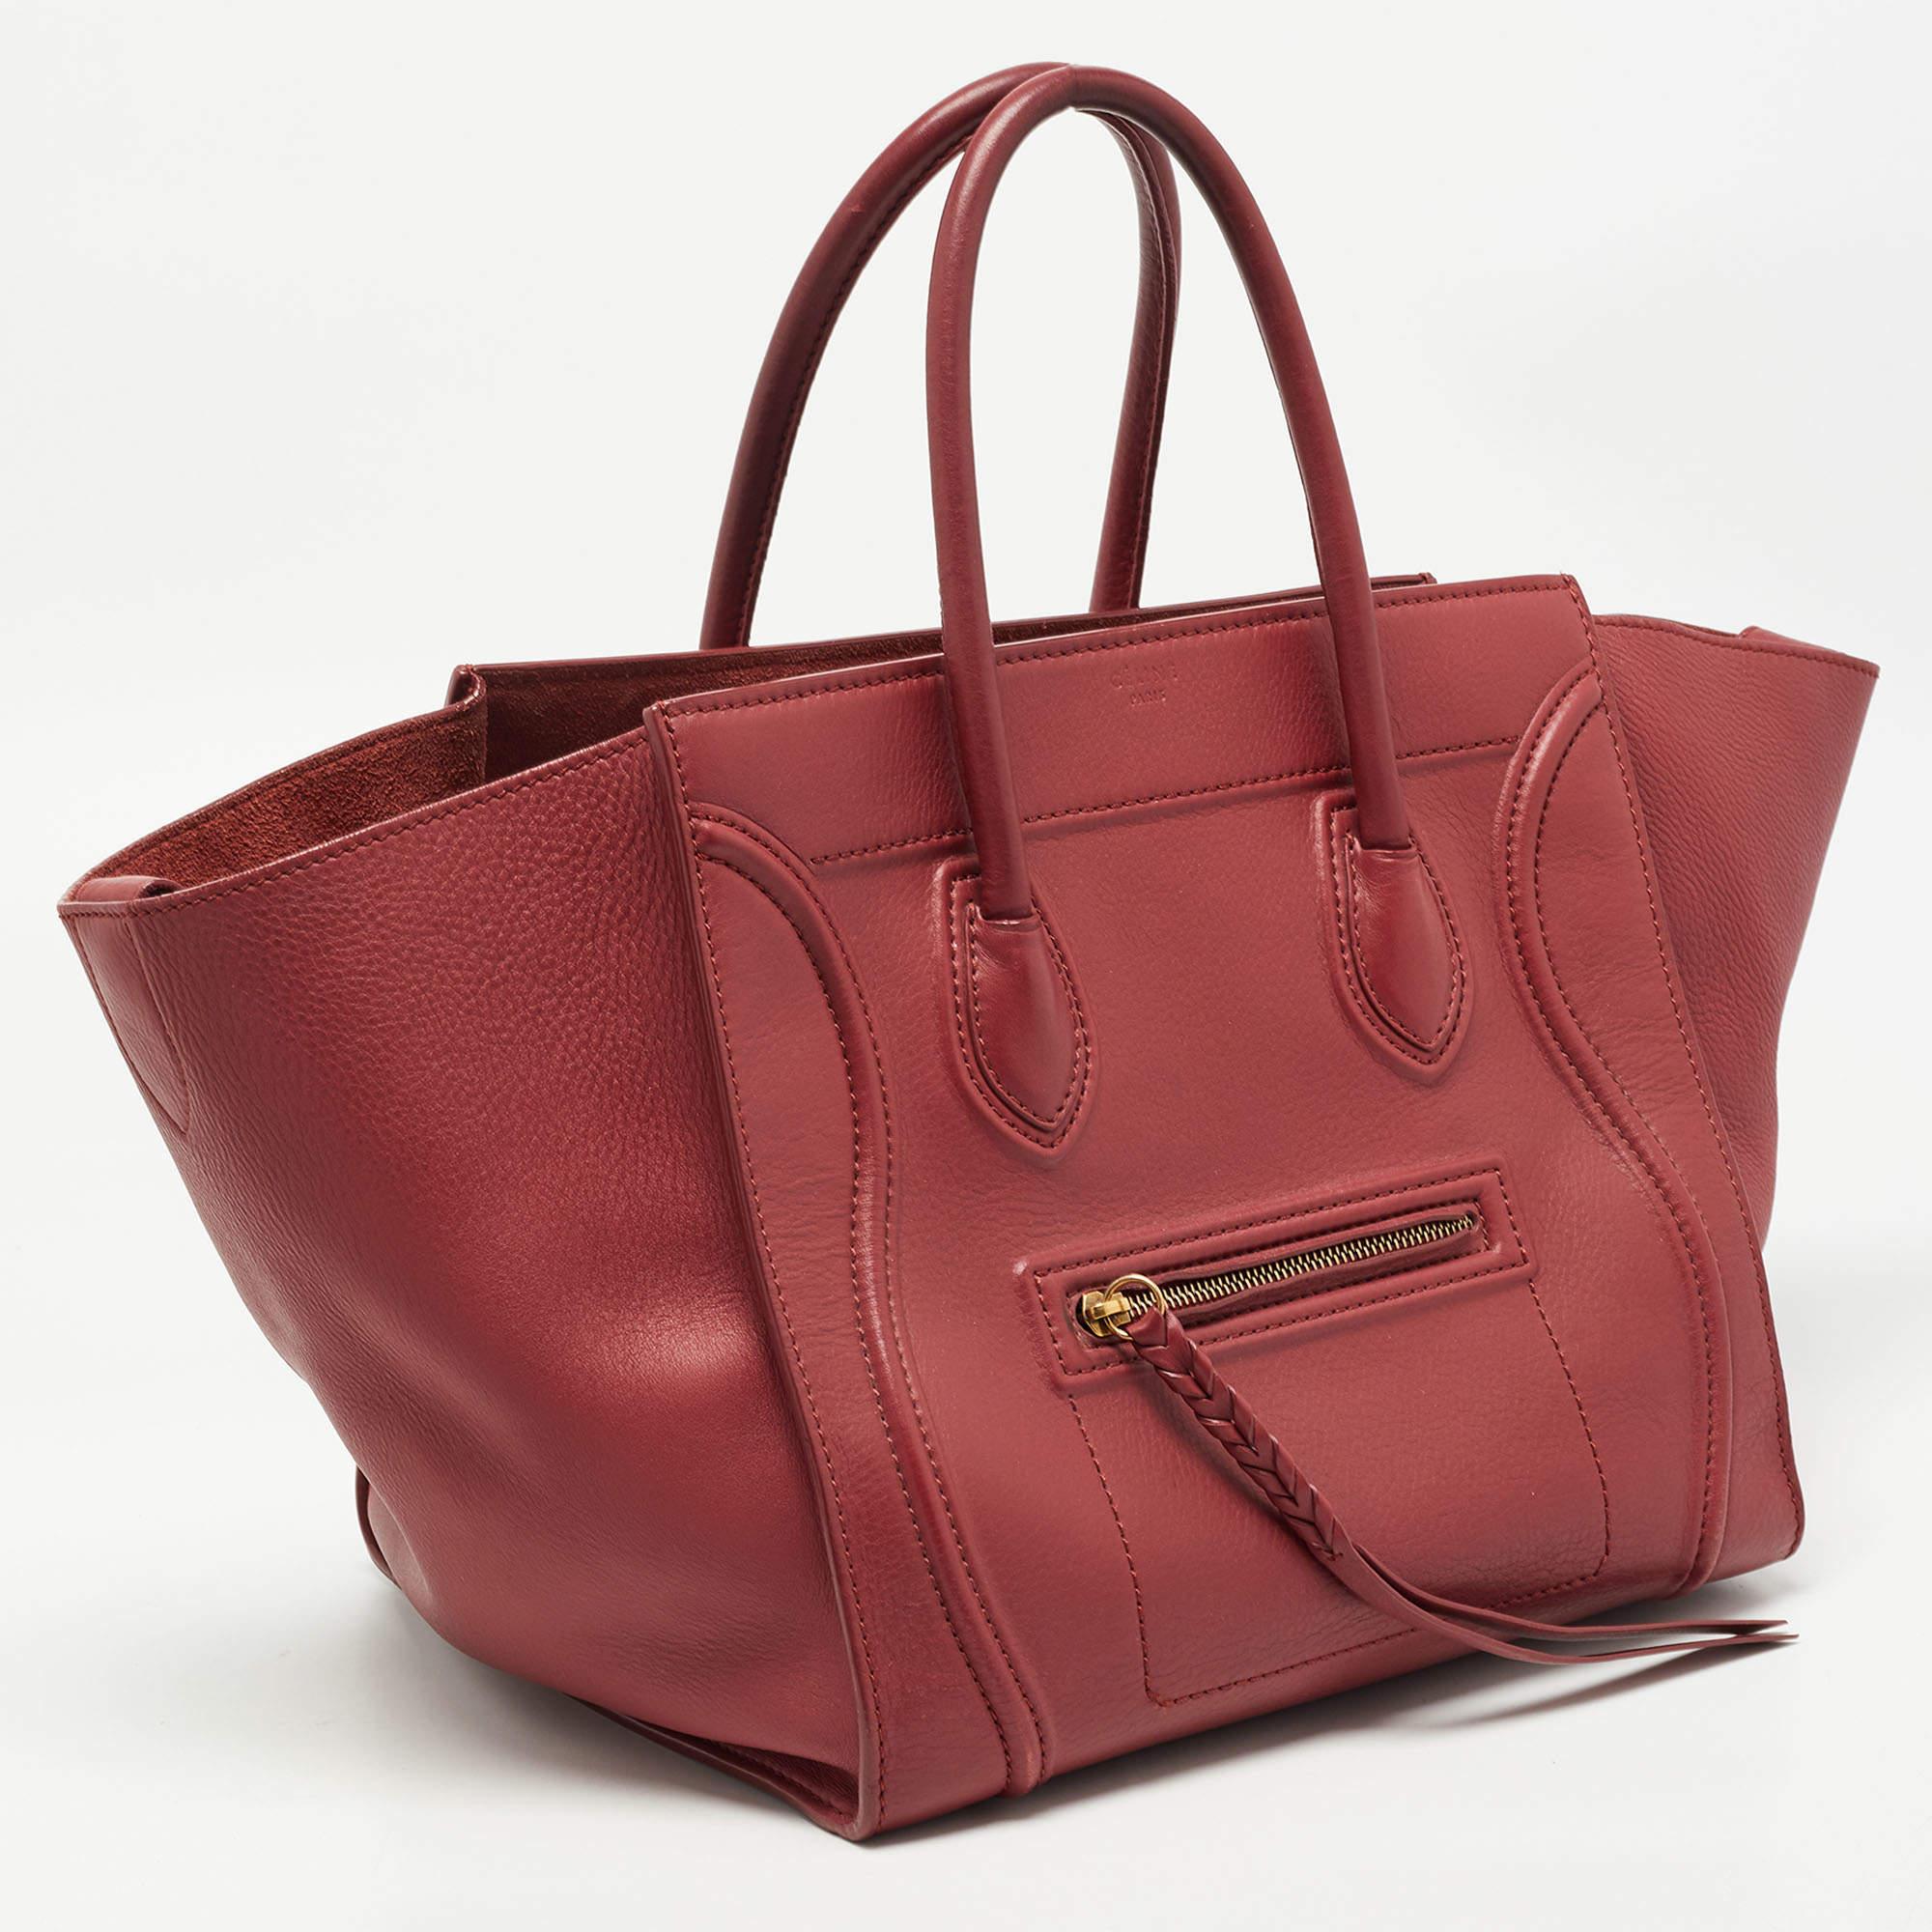 Women's Celine Red Leather Medium Phantom Luggage Tote